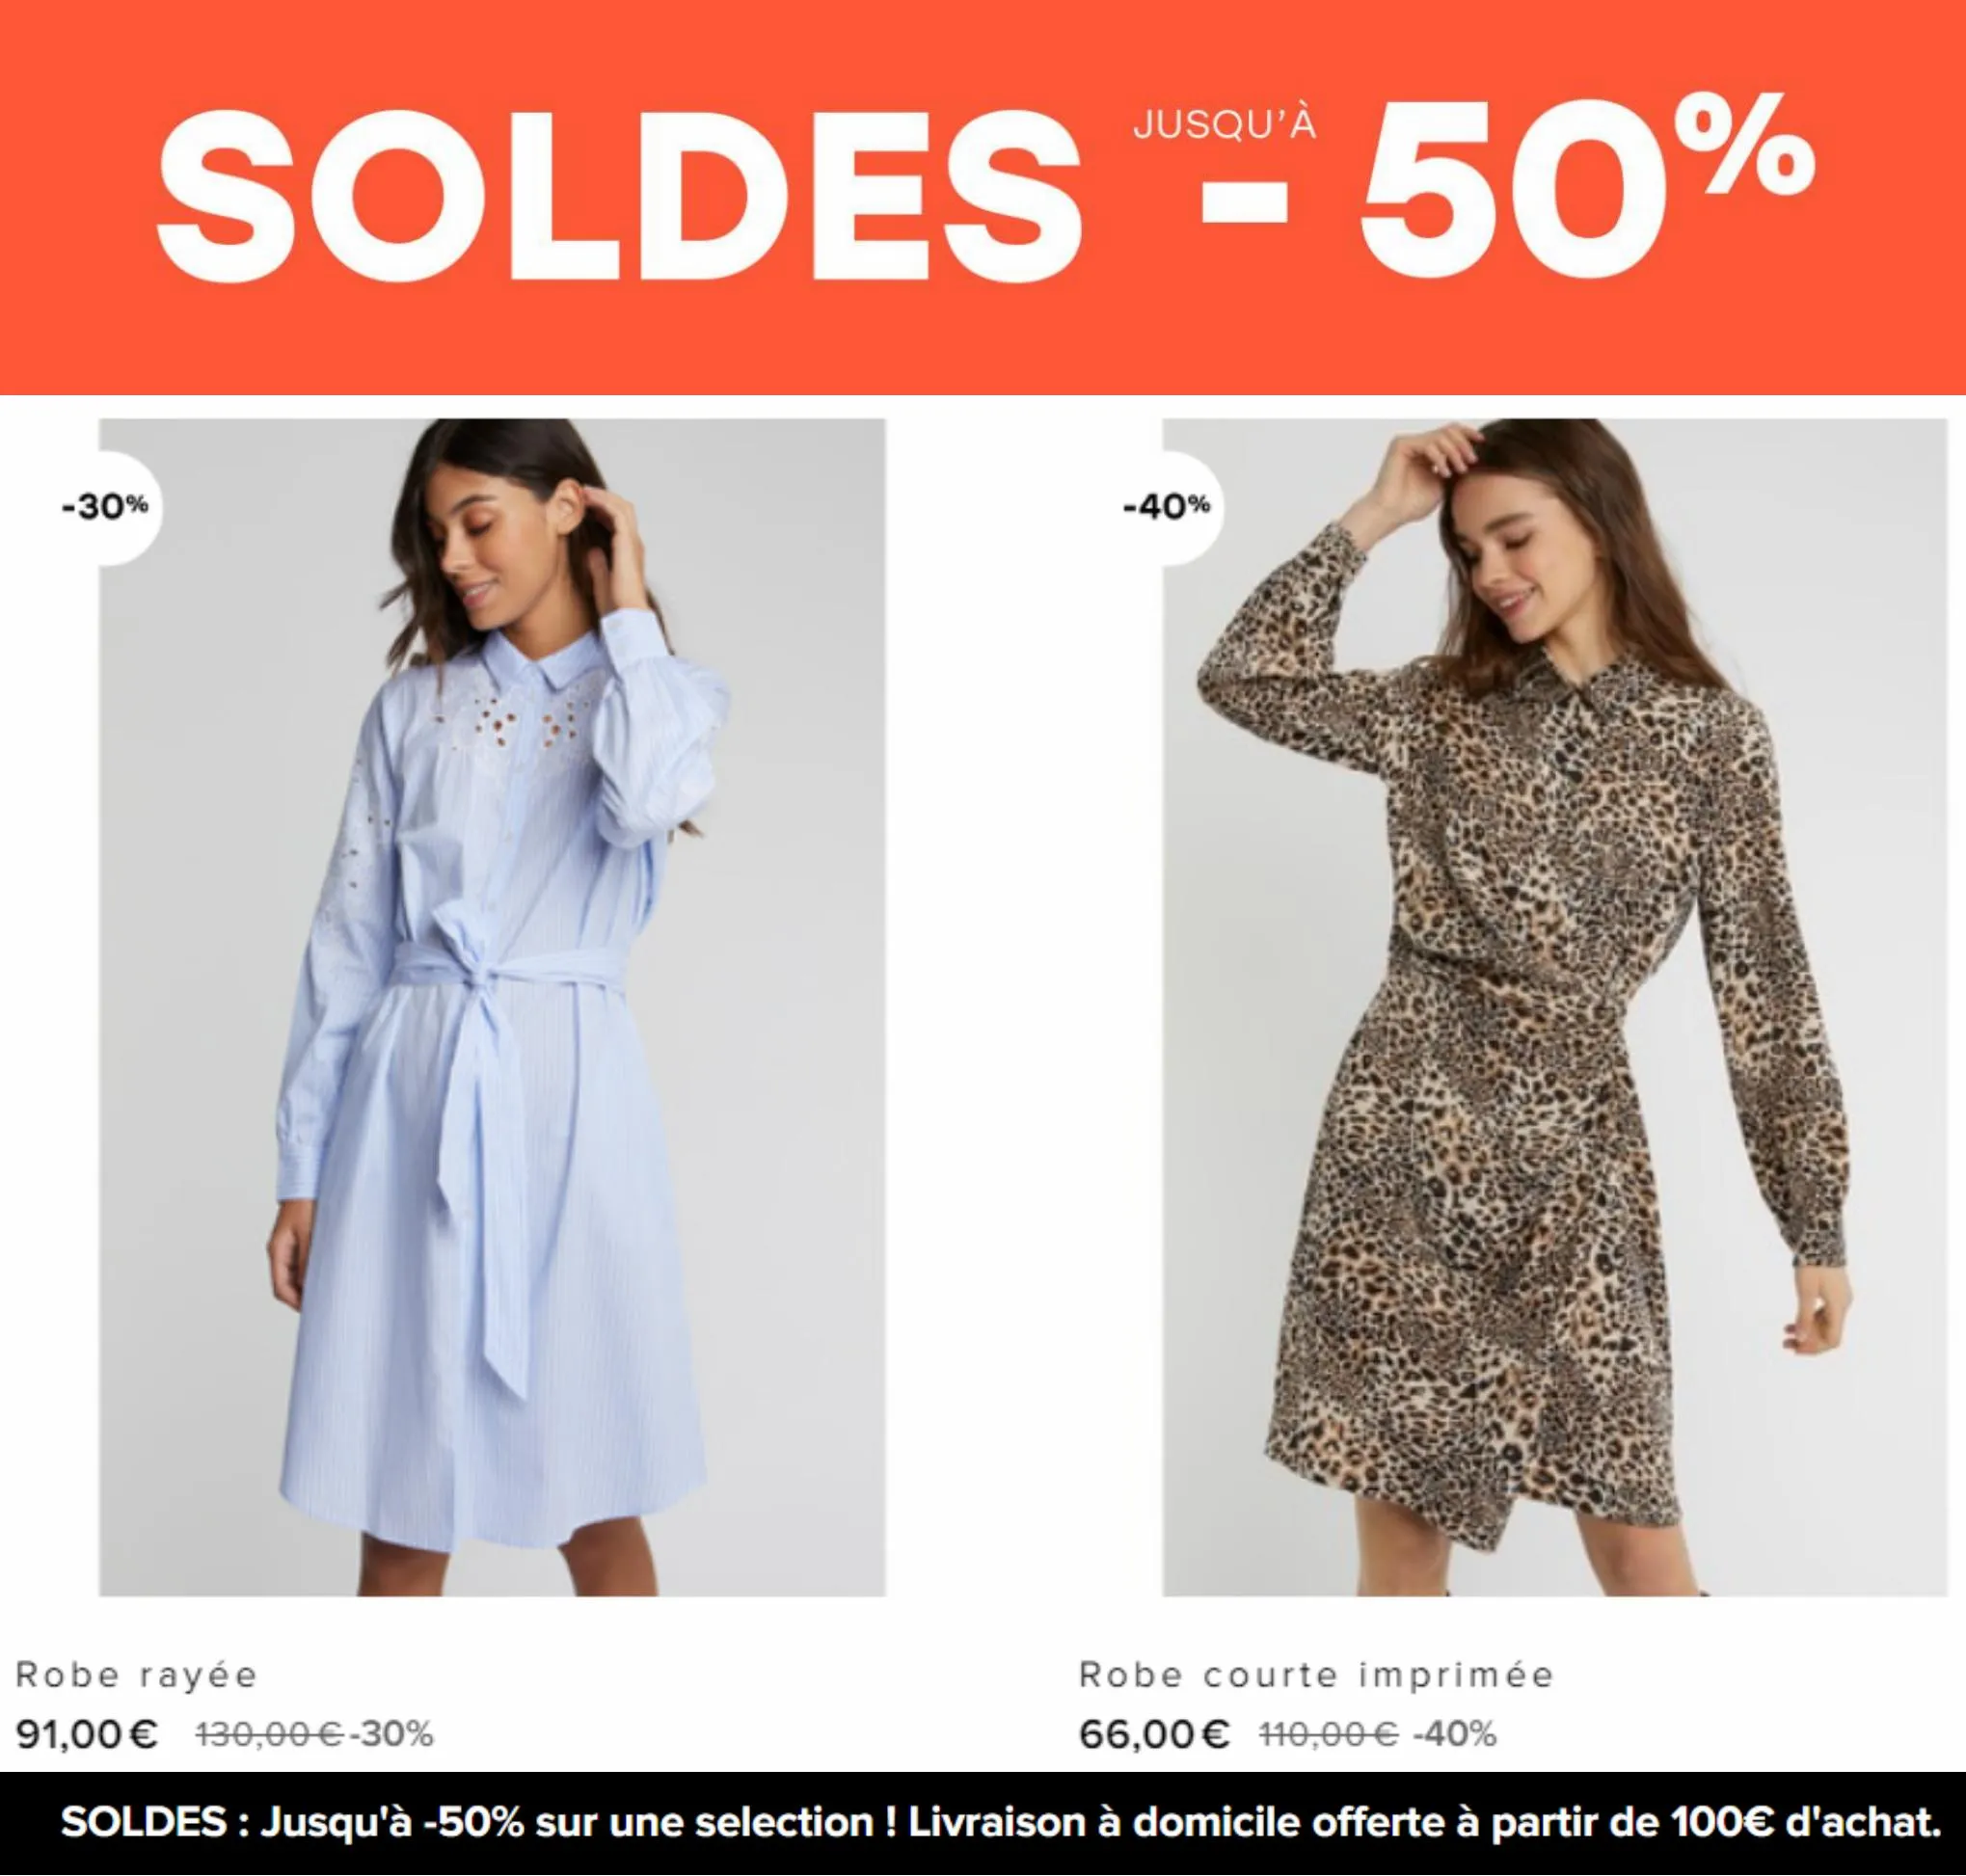 Catalogue Soldes -50% Femme, page 00003